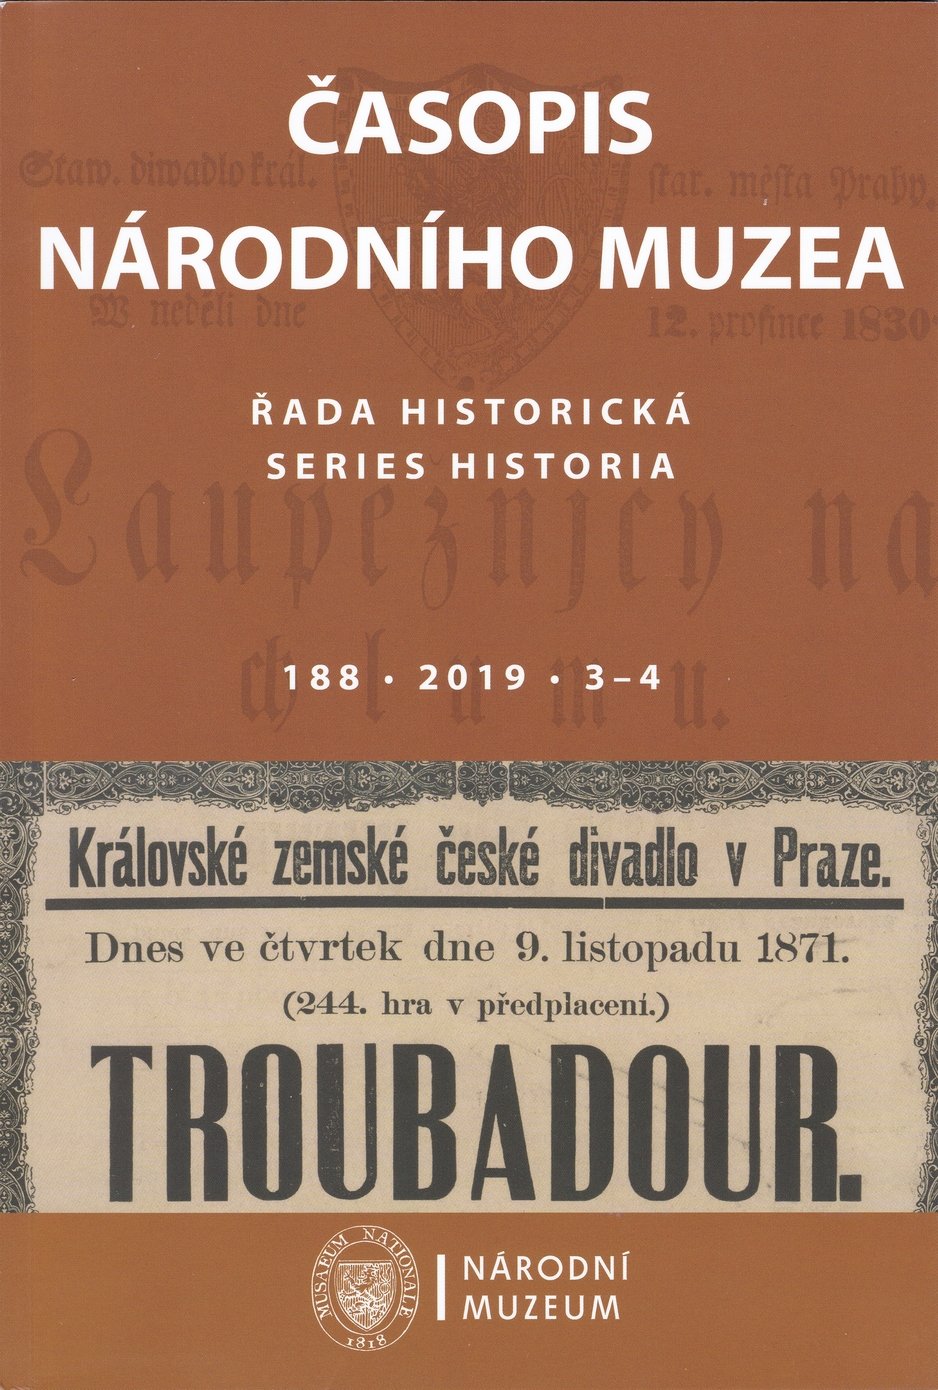 Casopis Národního muzea. Rada historická 2019/188. évf. 3-4. sz. (Rippl-Rónai Múzeum CC BY-NC-ND)